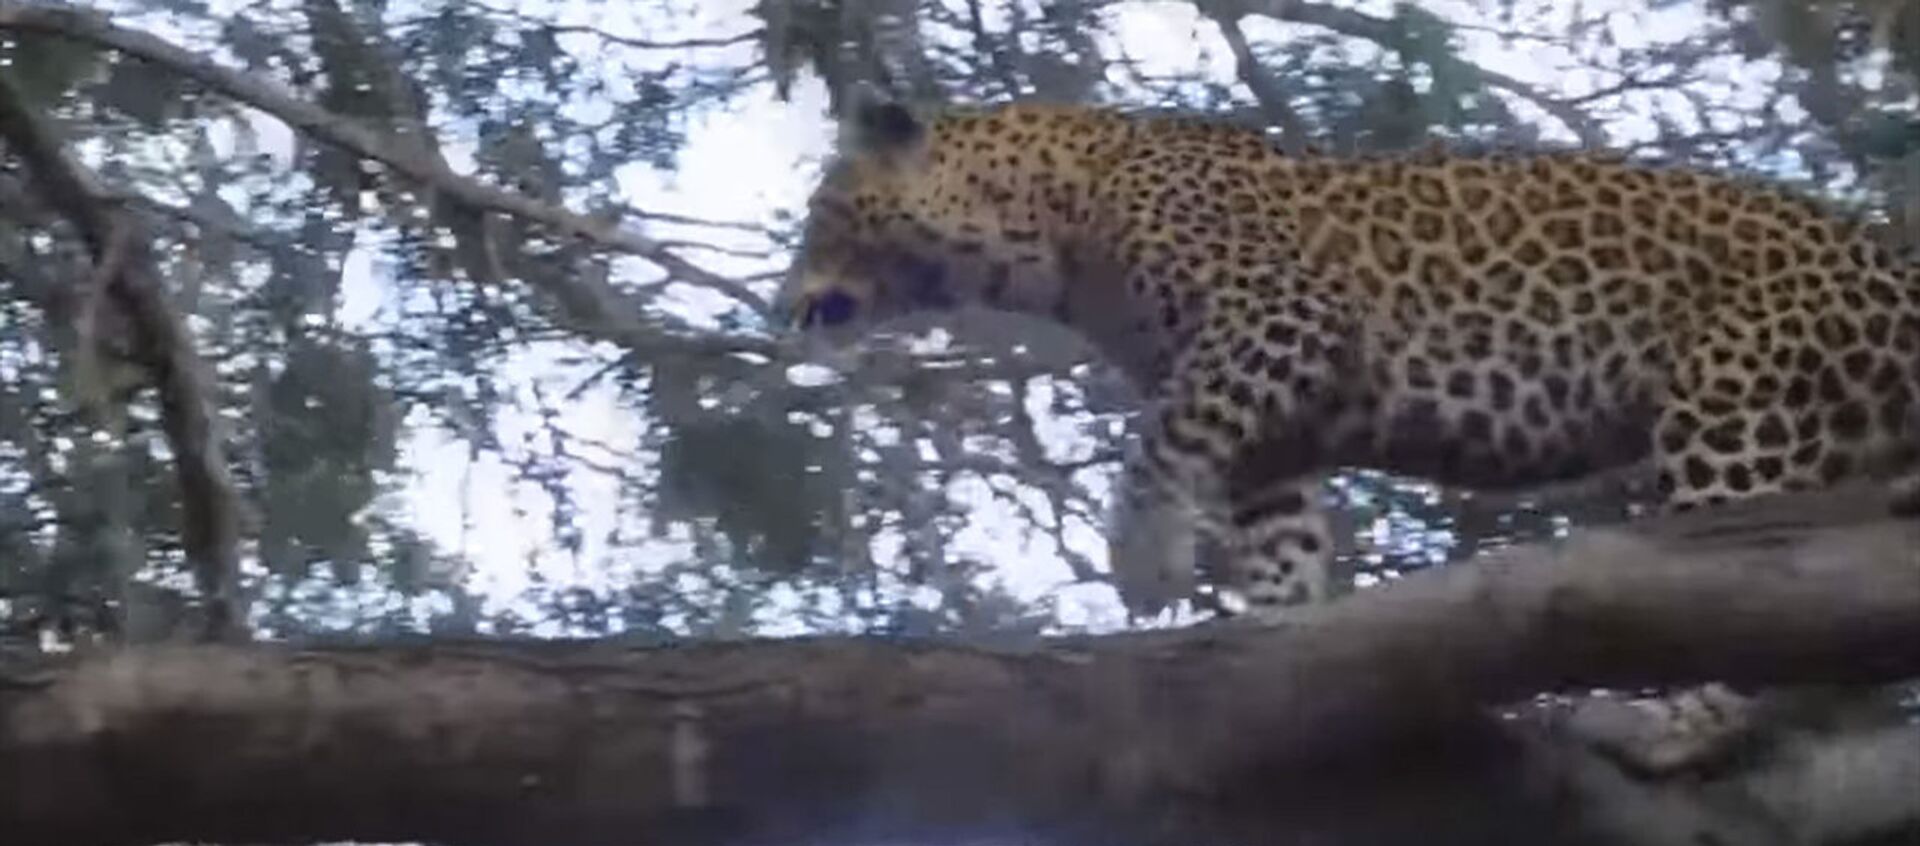 Леопард спрыгнул с дерева, спасаясь от вожака-бабуина. Видео - Sputnik Кыргызстан, 1920, 21.04.2021